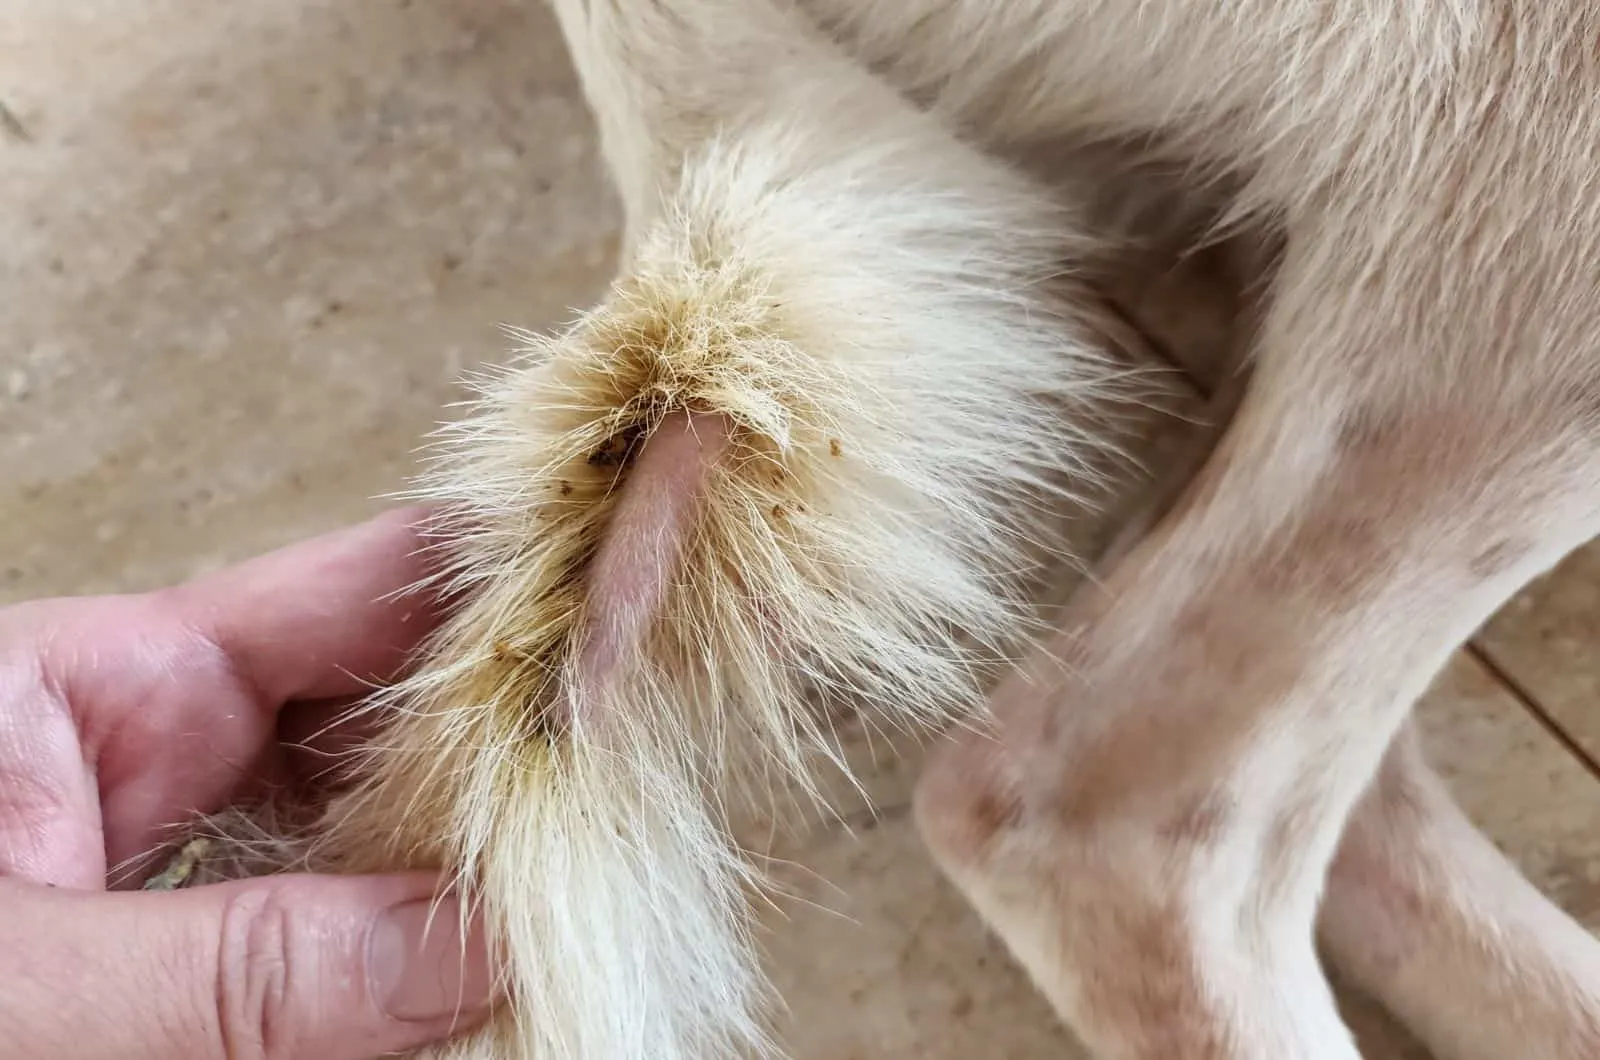 Tick Scab On Dog's leg